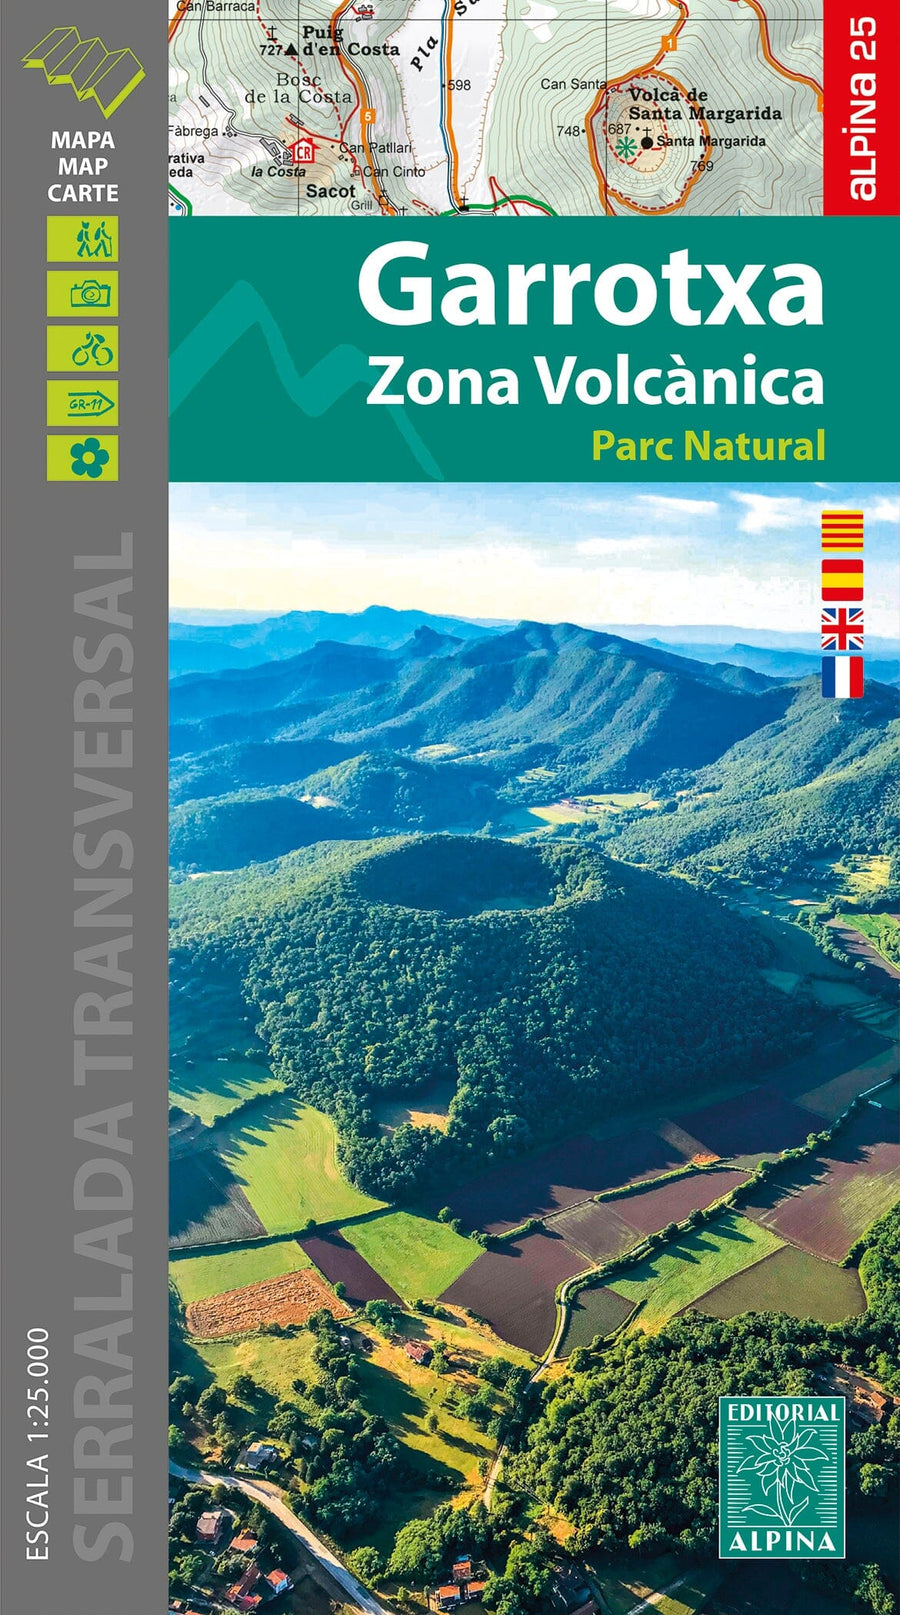 Carte de randonnée - Parc naturel de la zone Volcanique de la Garrotxa (Catalogne) | Alpina carte pliée Editorial Alpina 